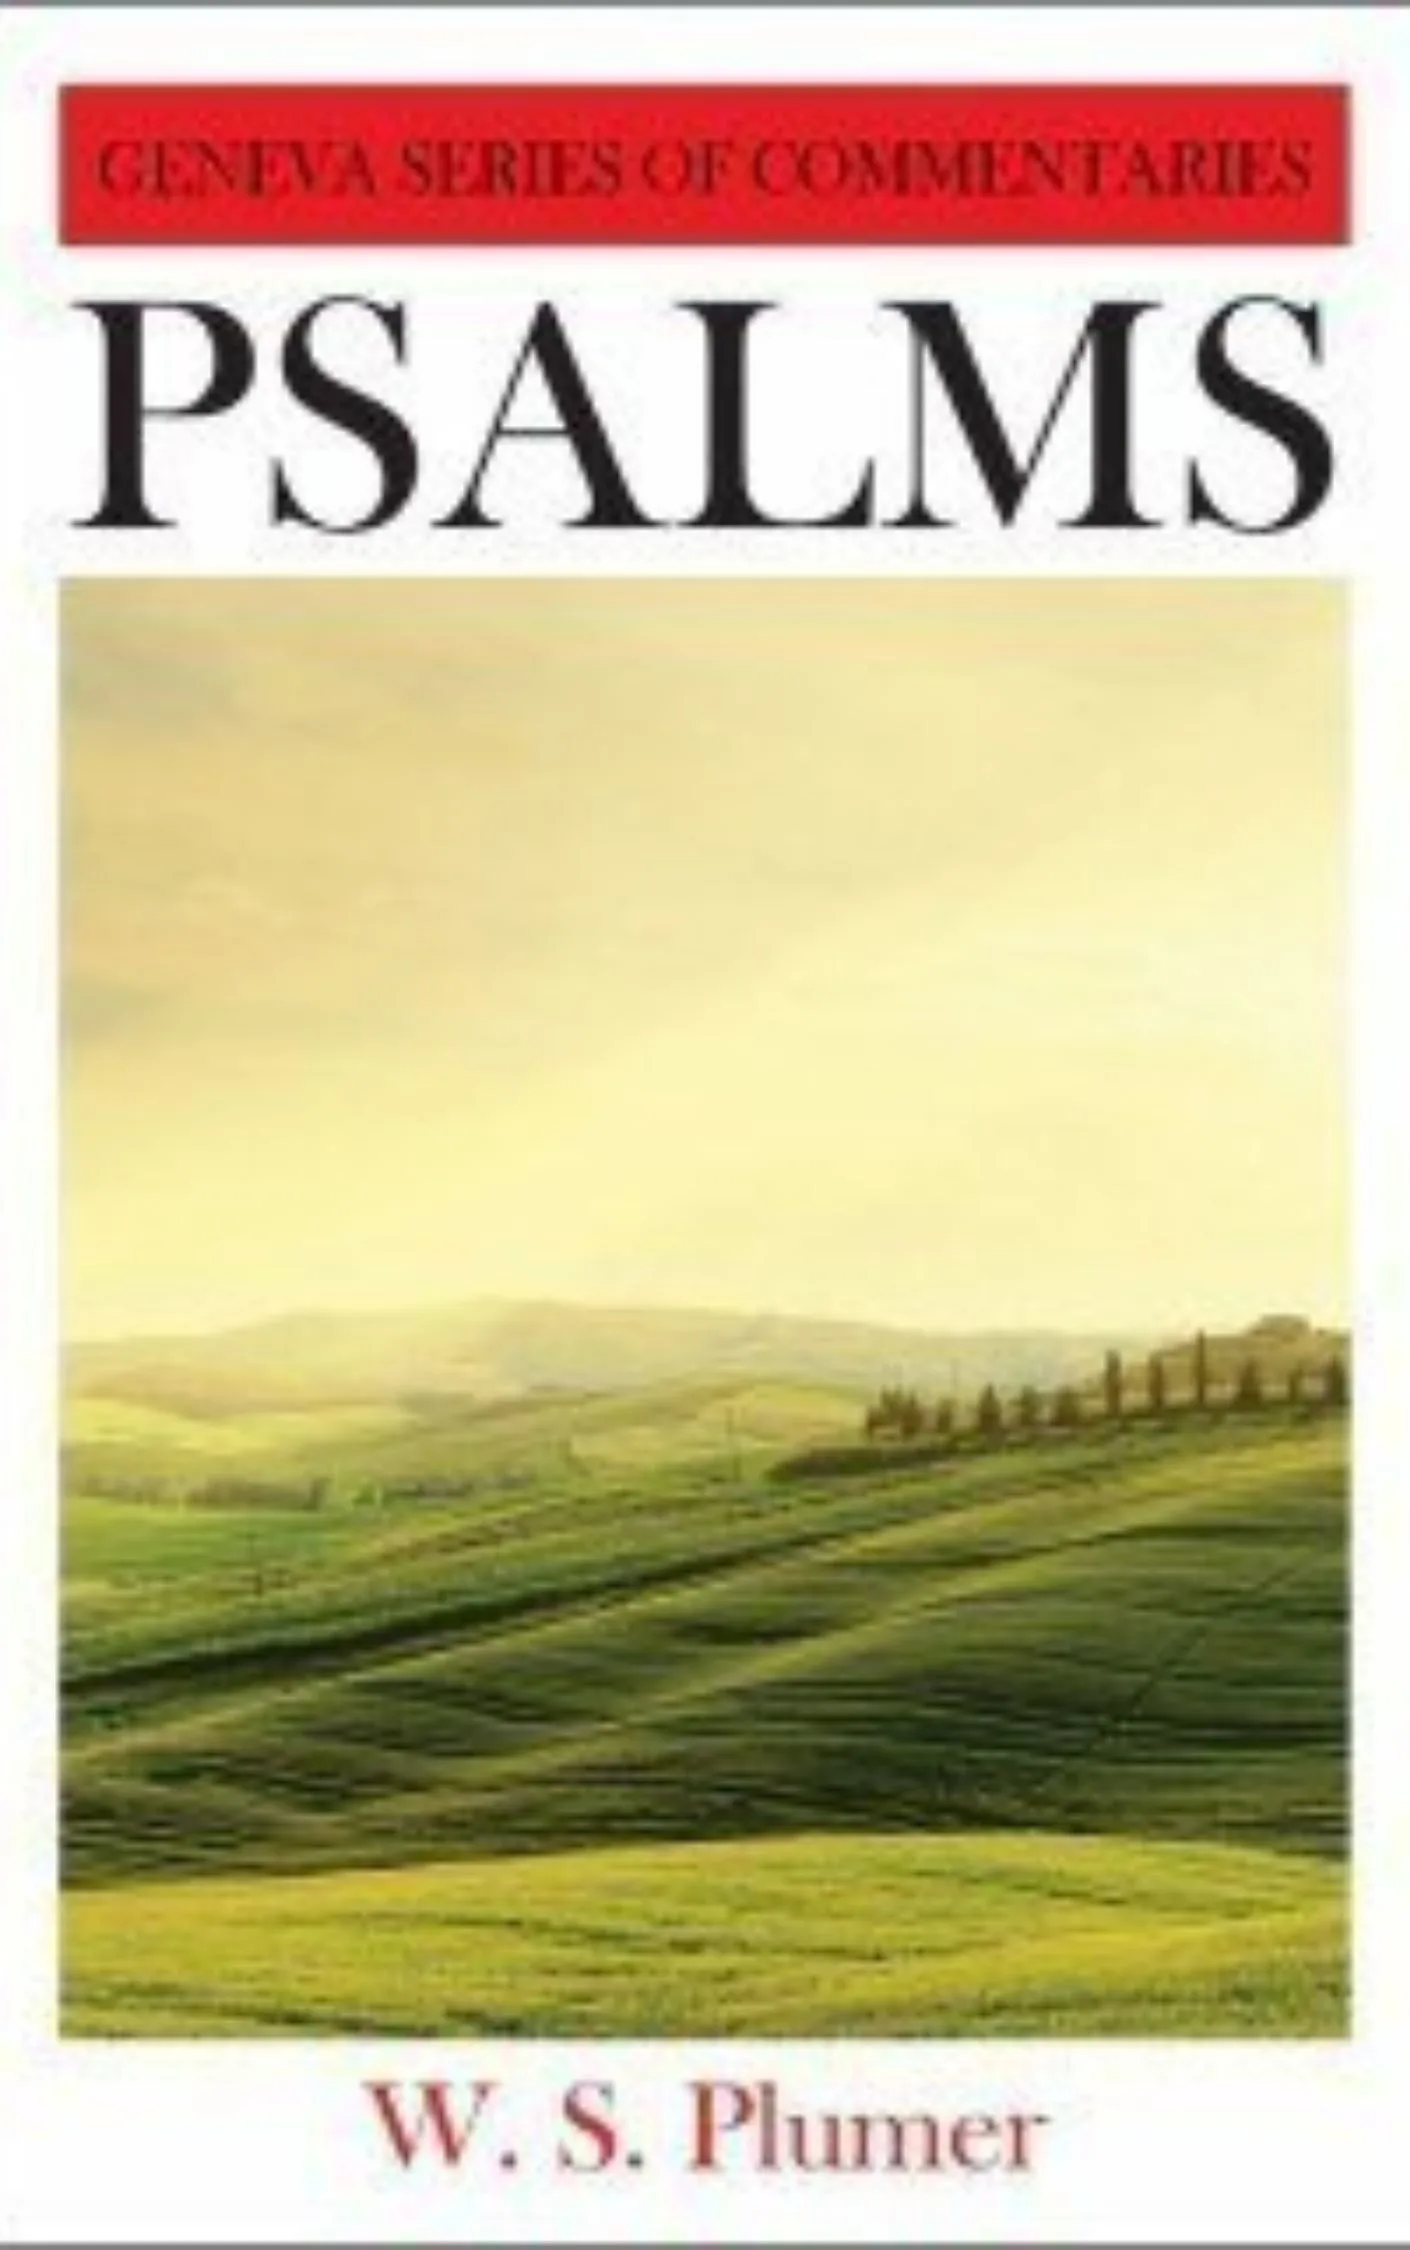 Psalms by W.S. Plumer